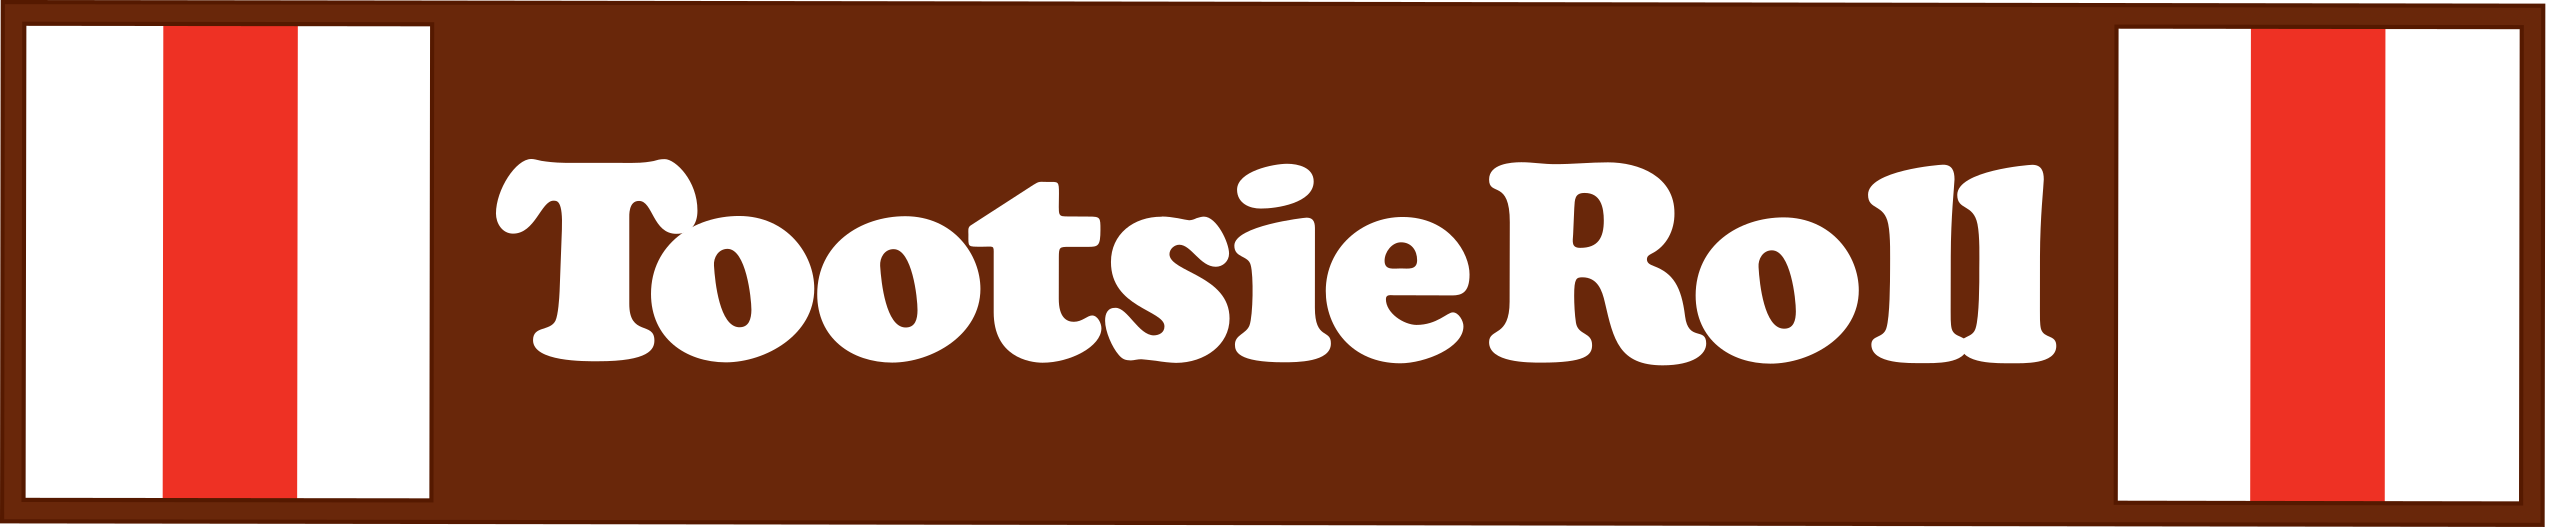 Tootsie Roll Industries, Inc.